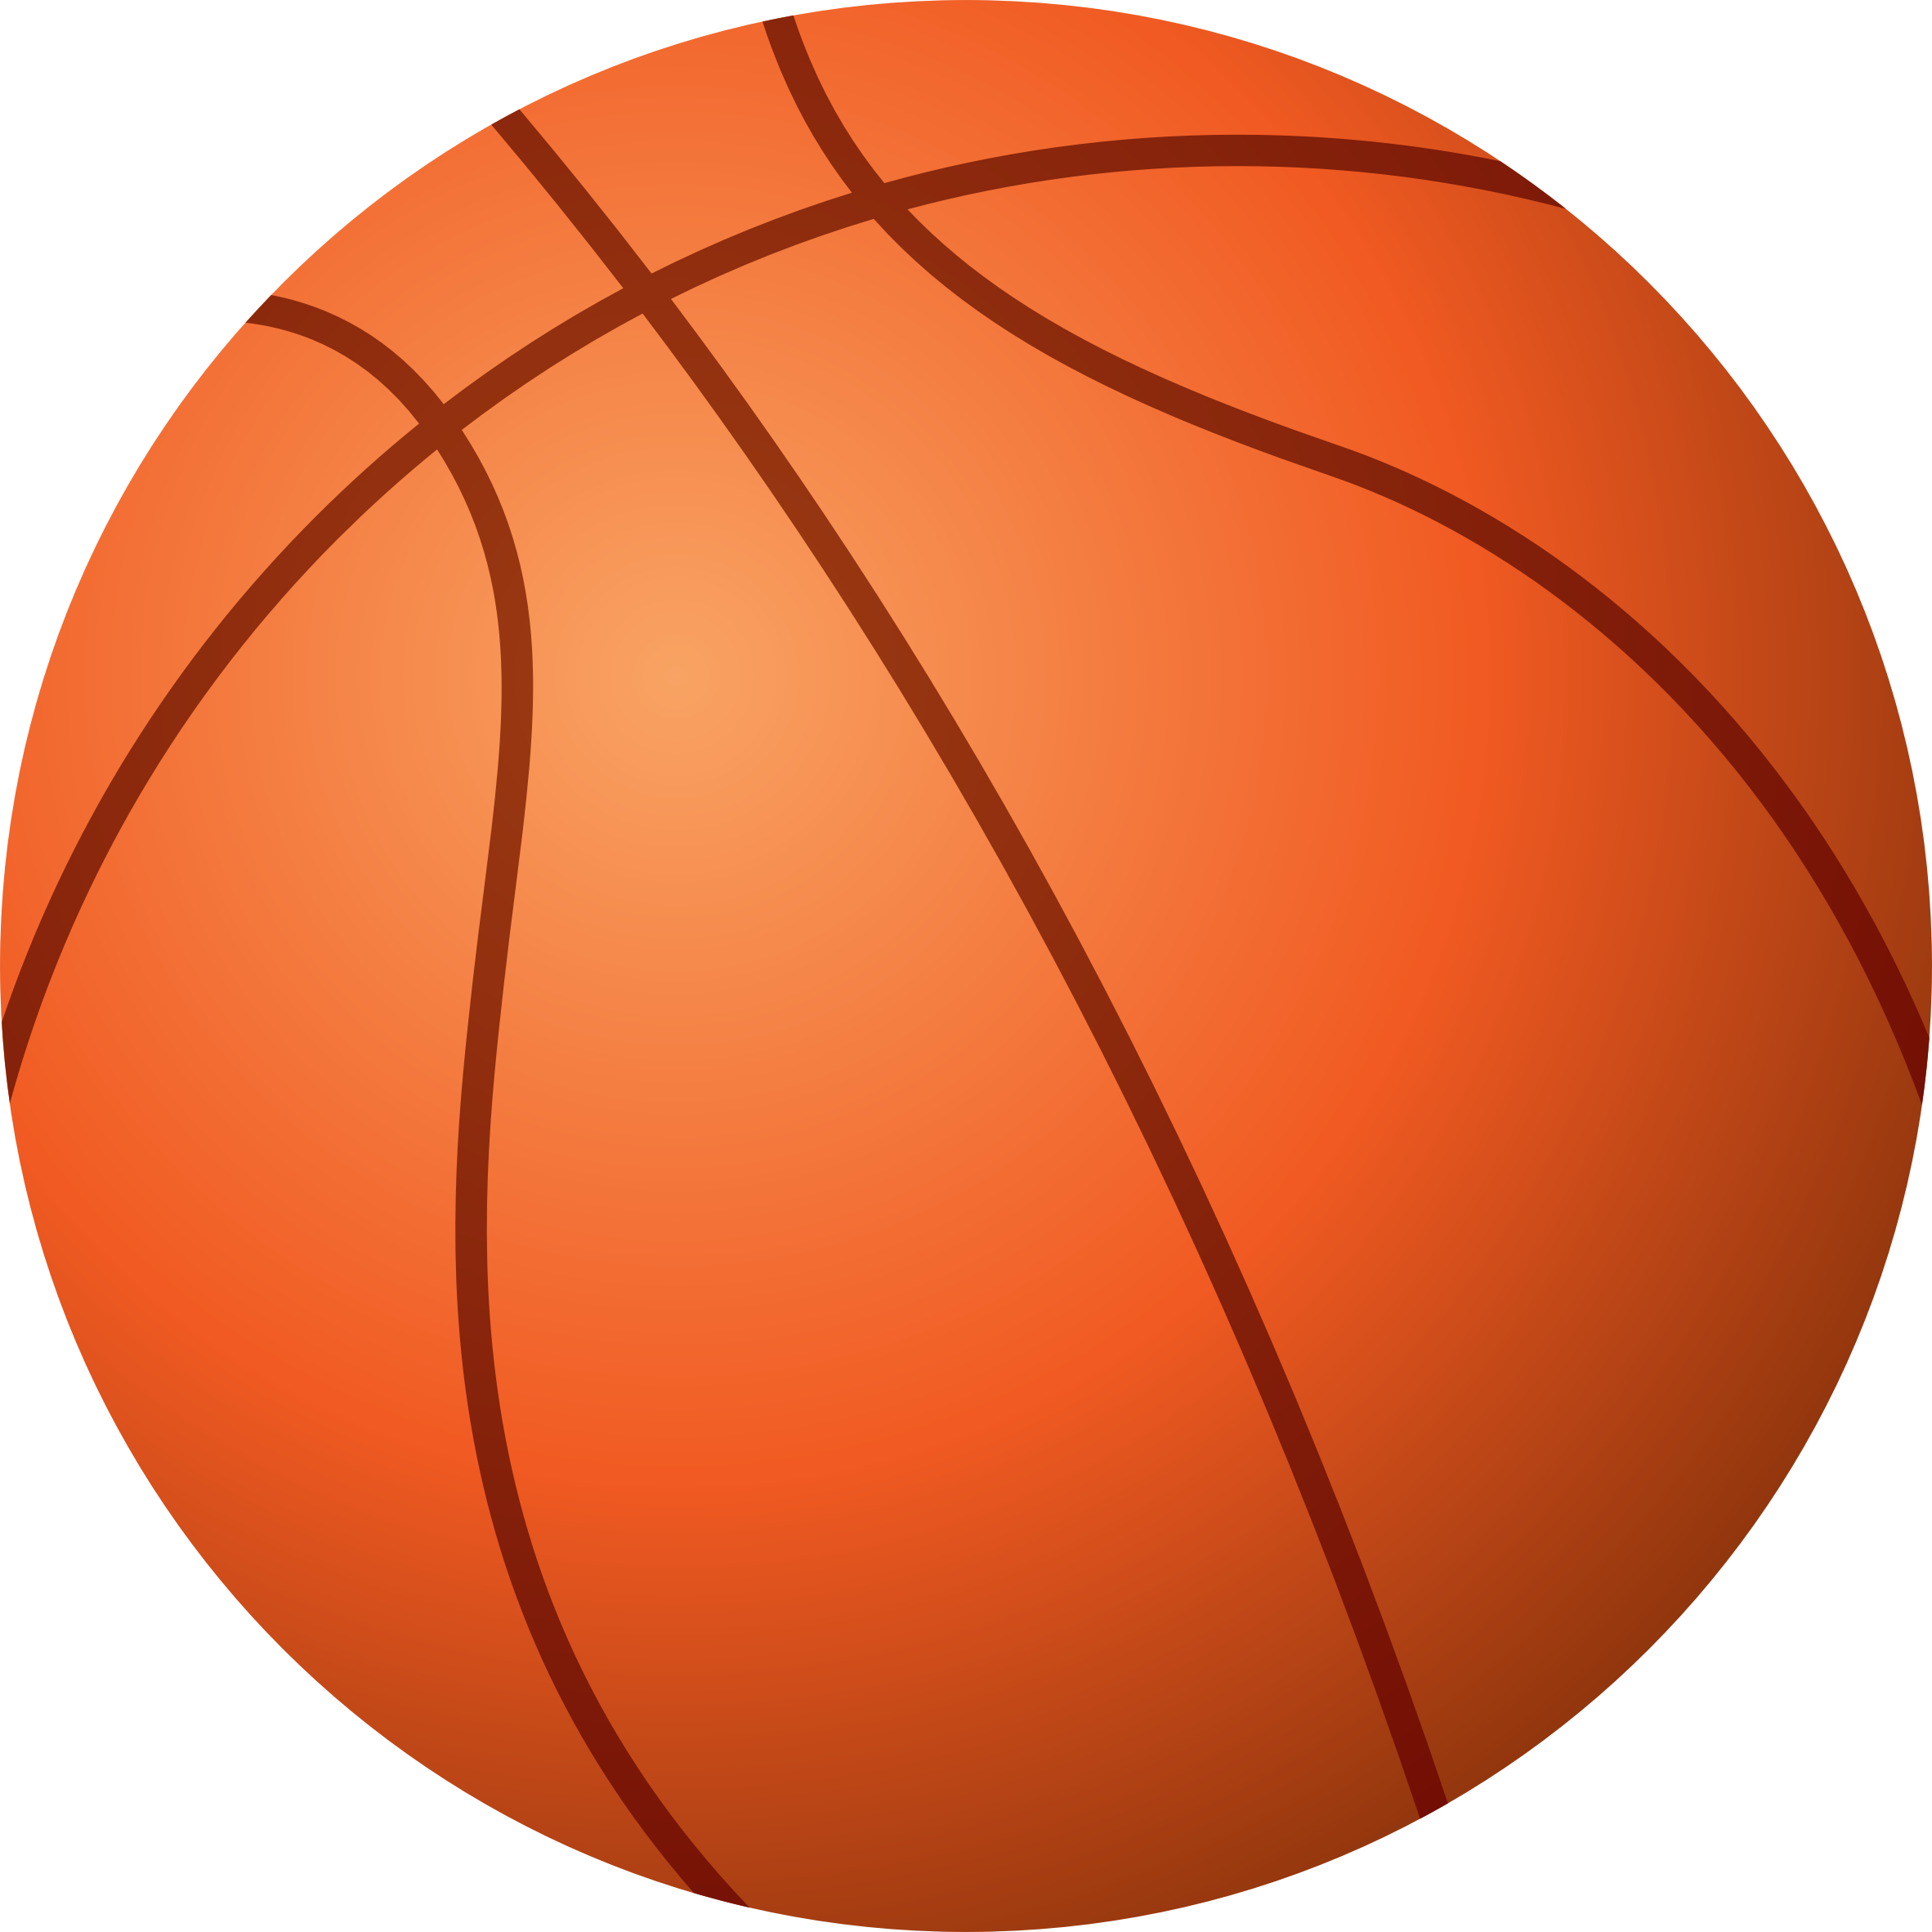 Download Basketball Vector Graphics image - Free stock photo ...